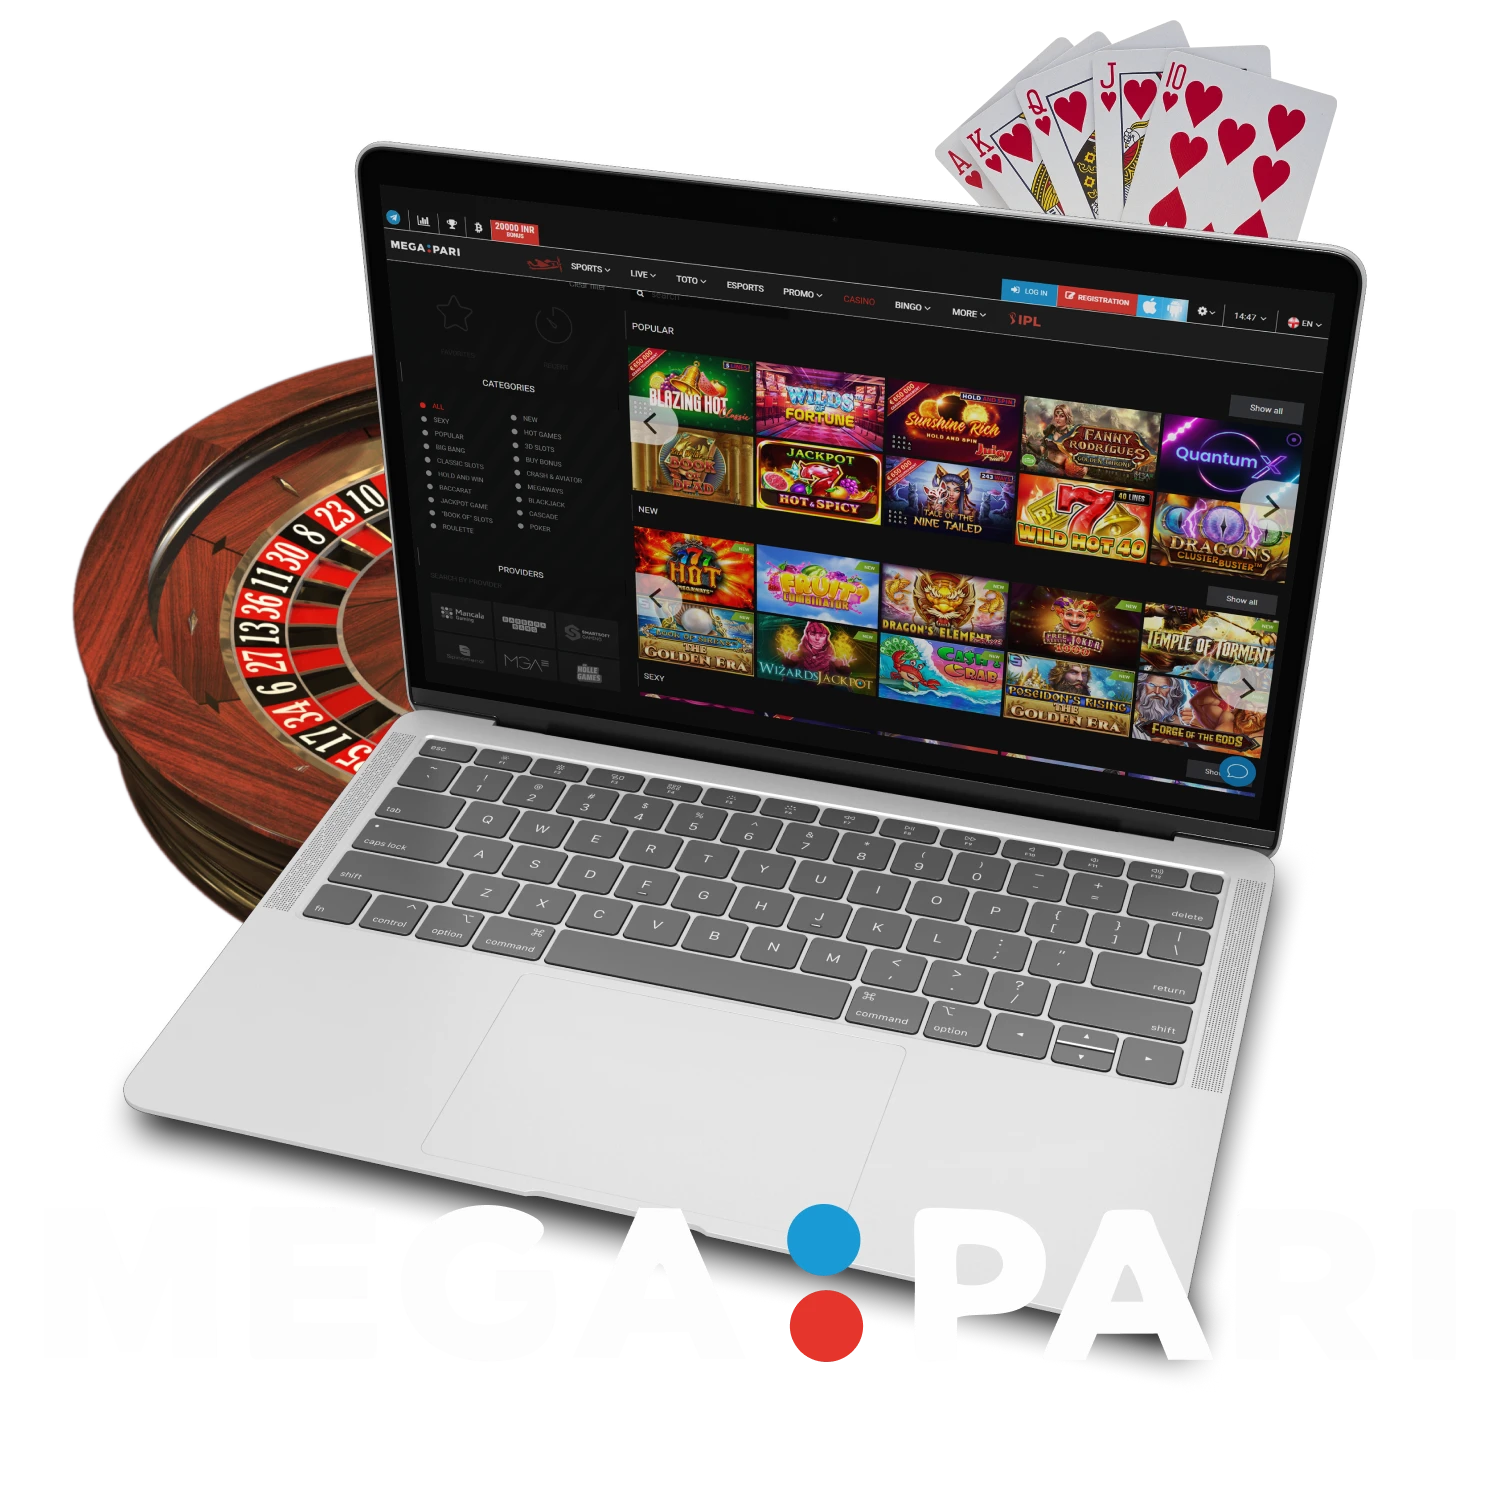 For Live Casino games, choose the Megapari site.